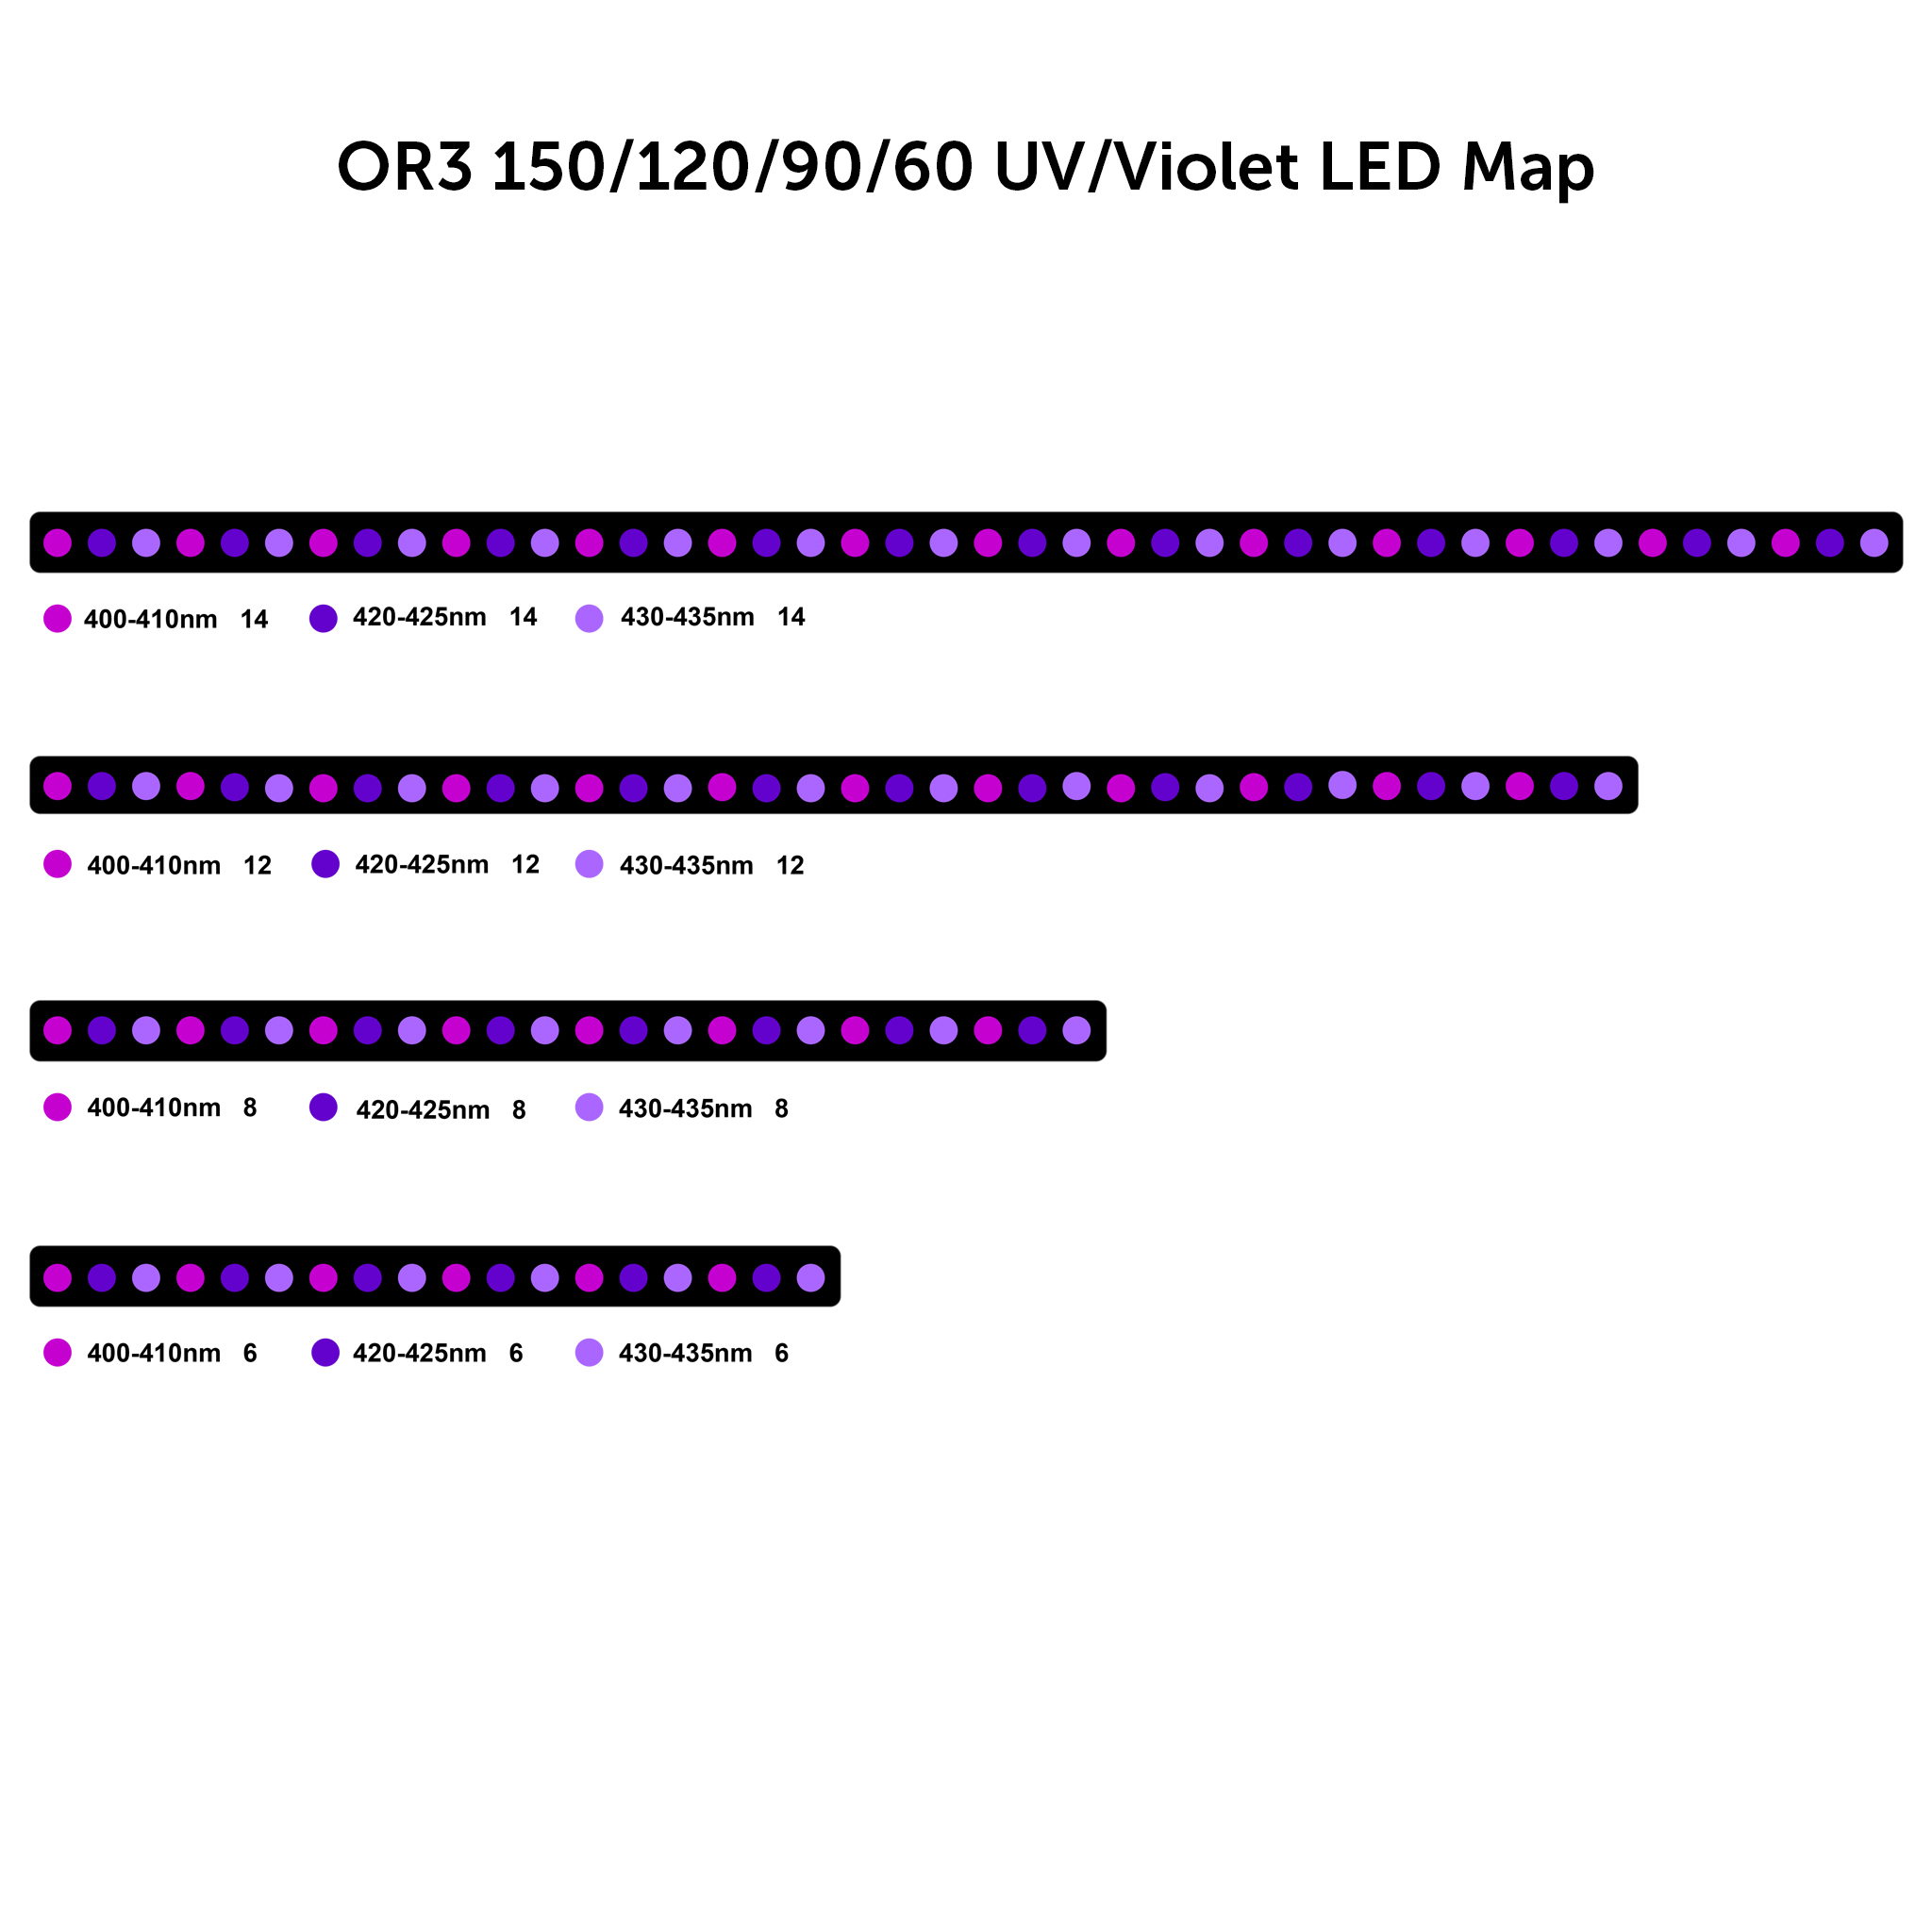 or3-reef-uv-violet-led-แผนที่